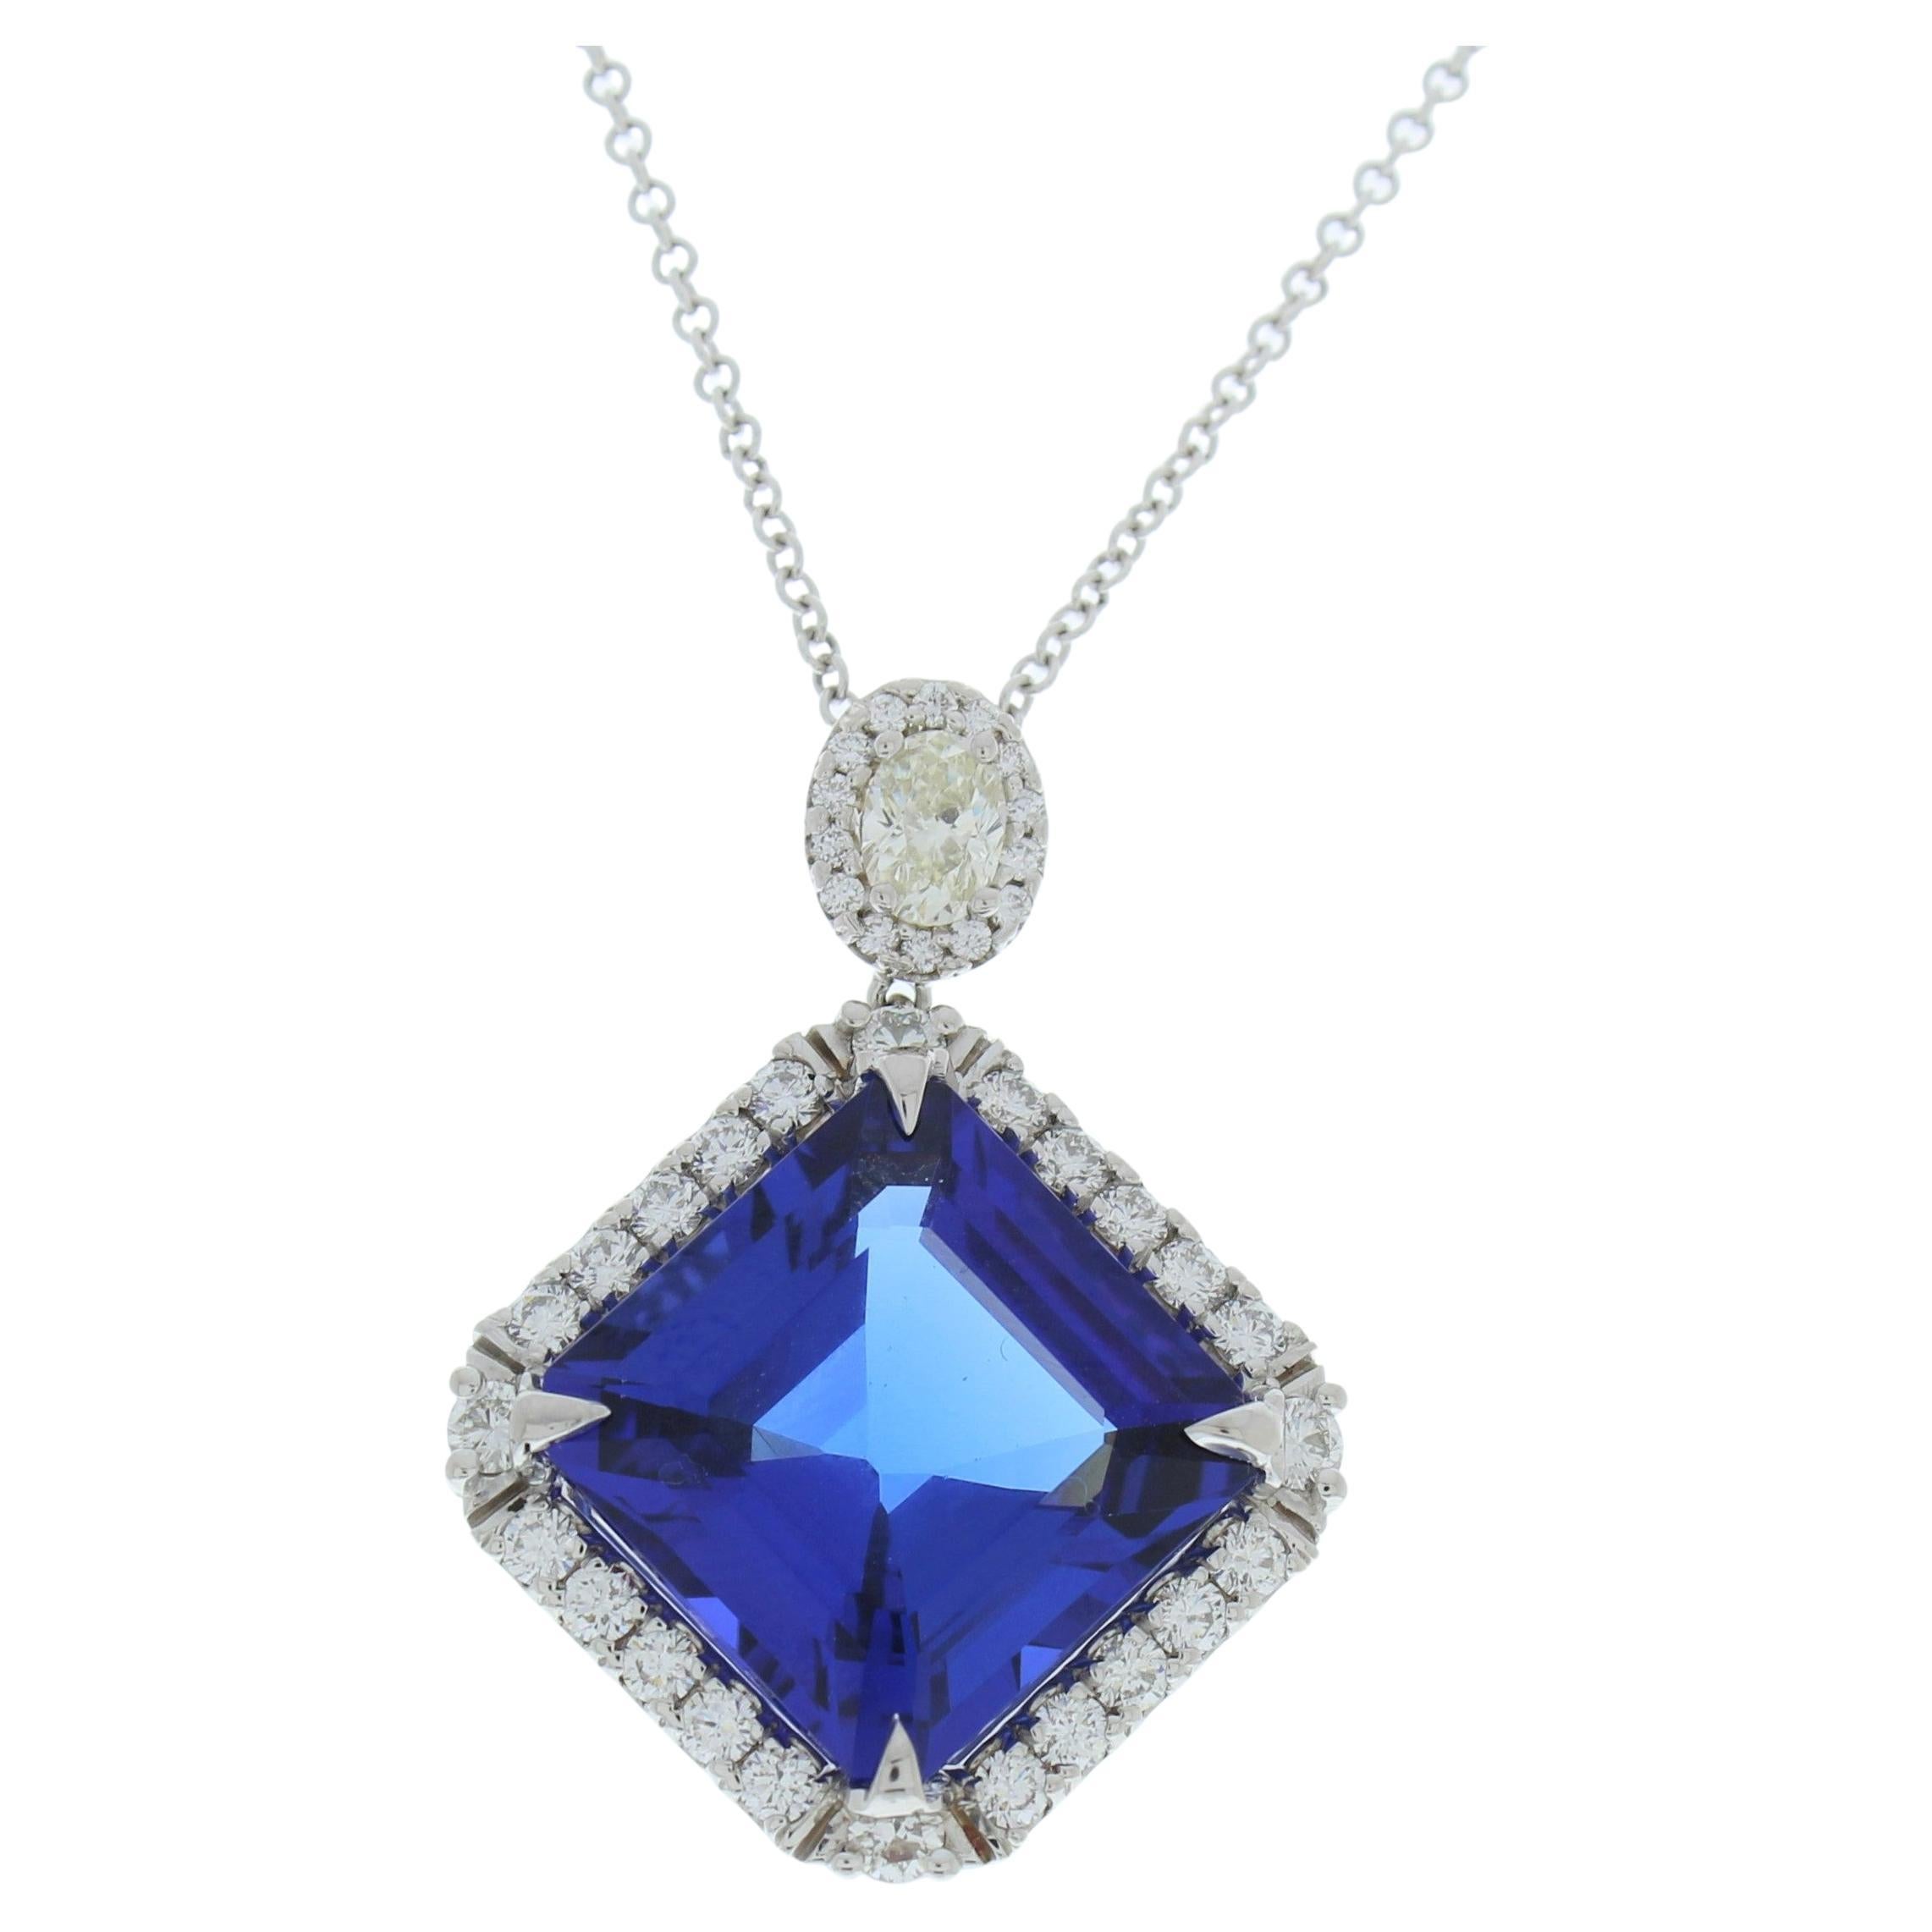 21 Carat Square Emerald Bluish Violet & Diamond Fashion Pendants In 18K WG For Sale